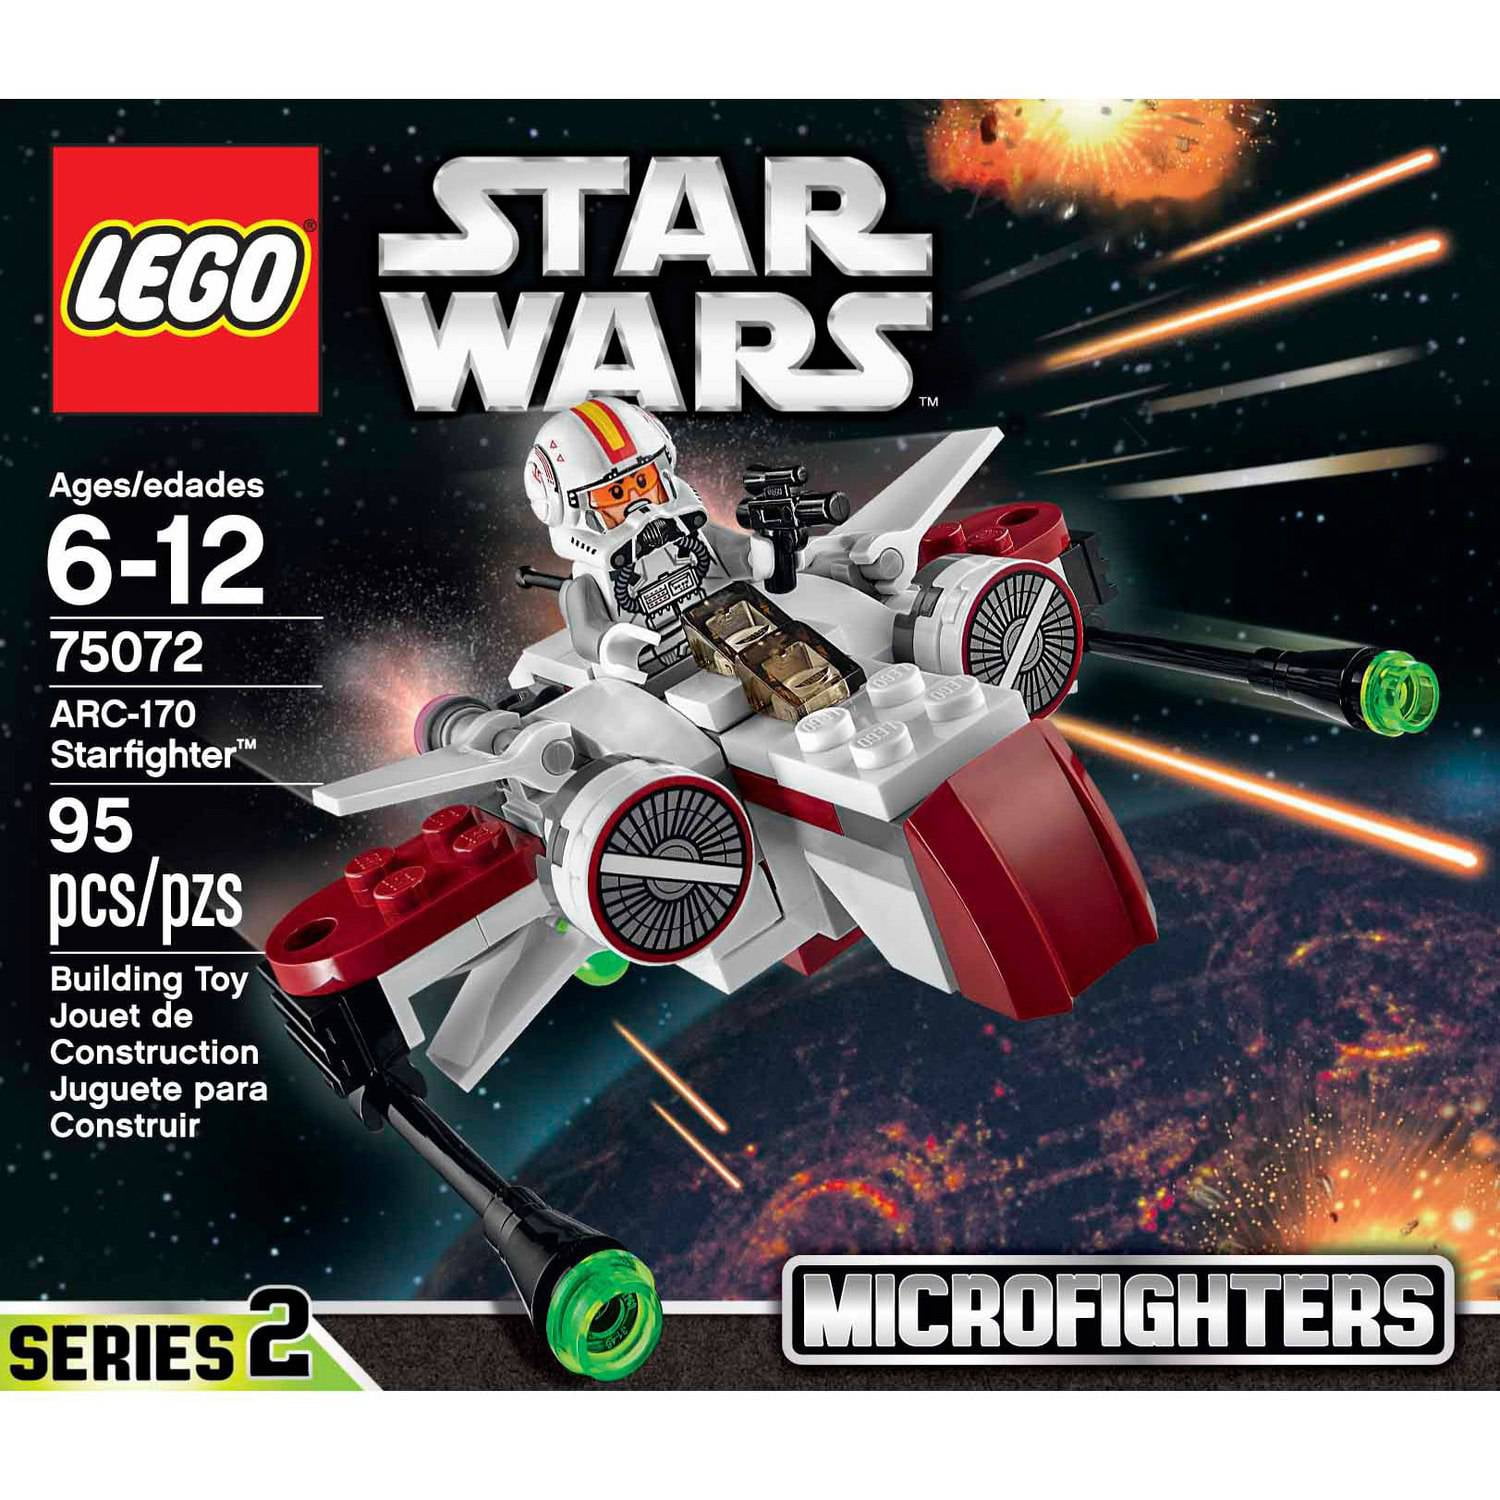 acceptabel sadel Fæstning LEGO Star Wars ARC-170 Starfighter - Walmart.com